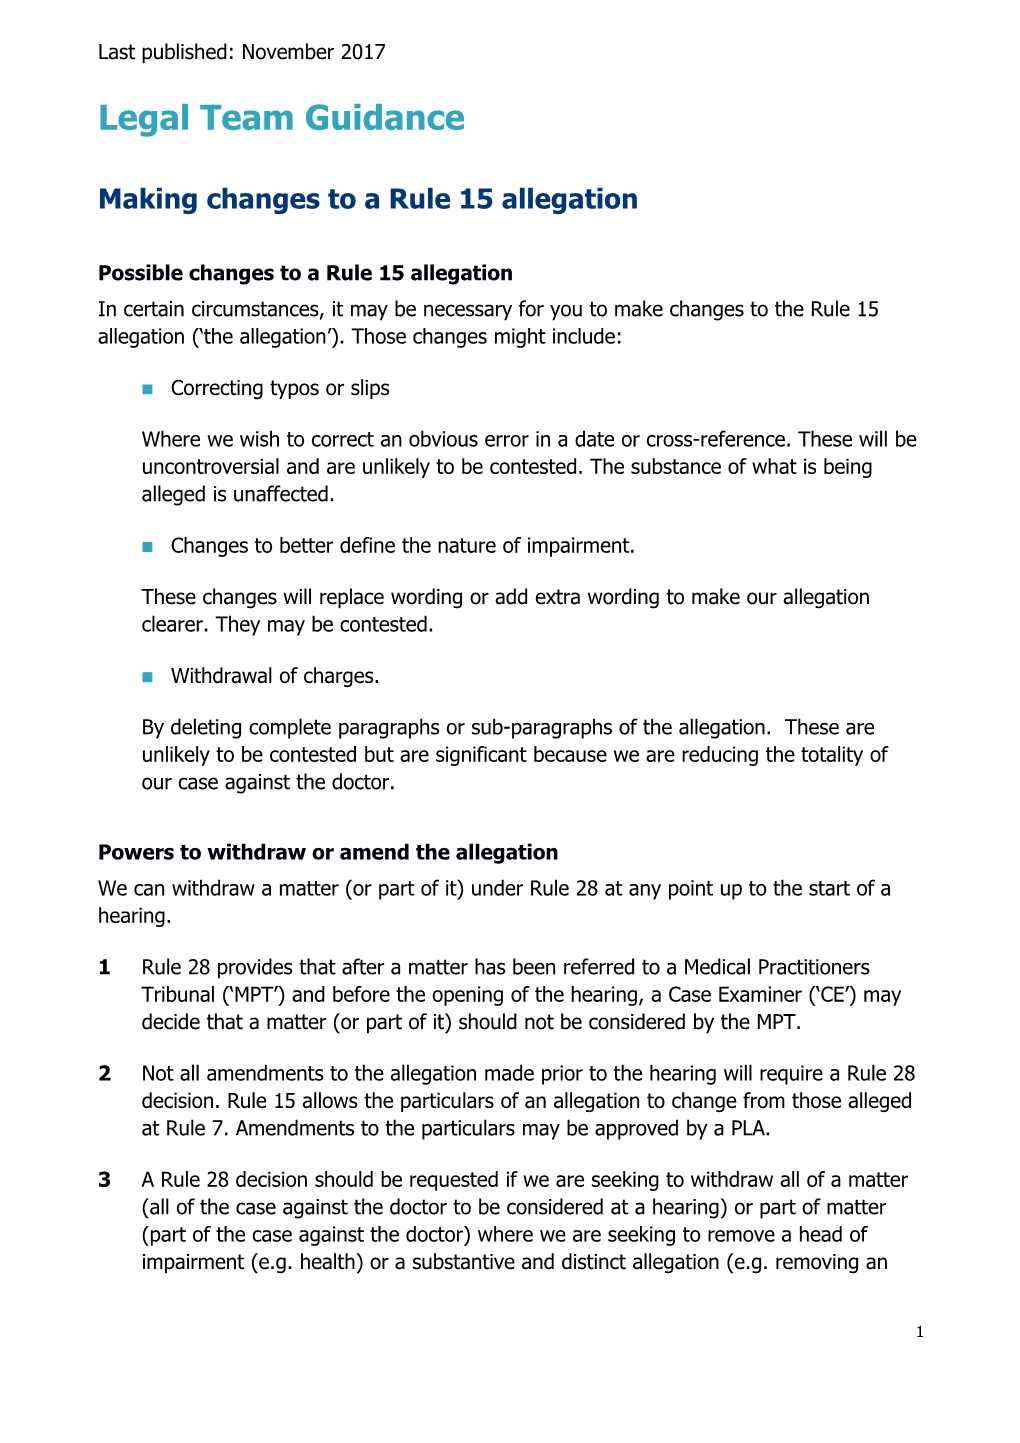 Legal Team Guidance - Rule 15 Allegation